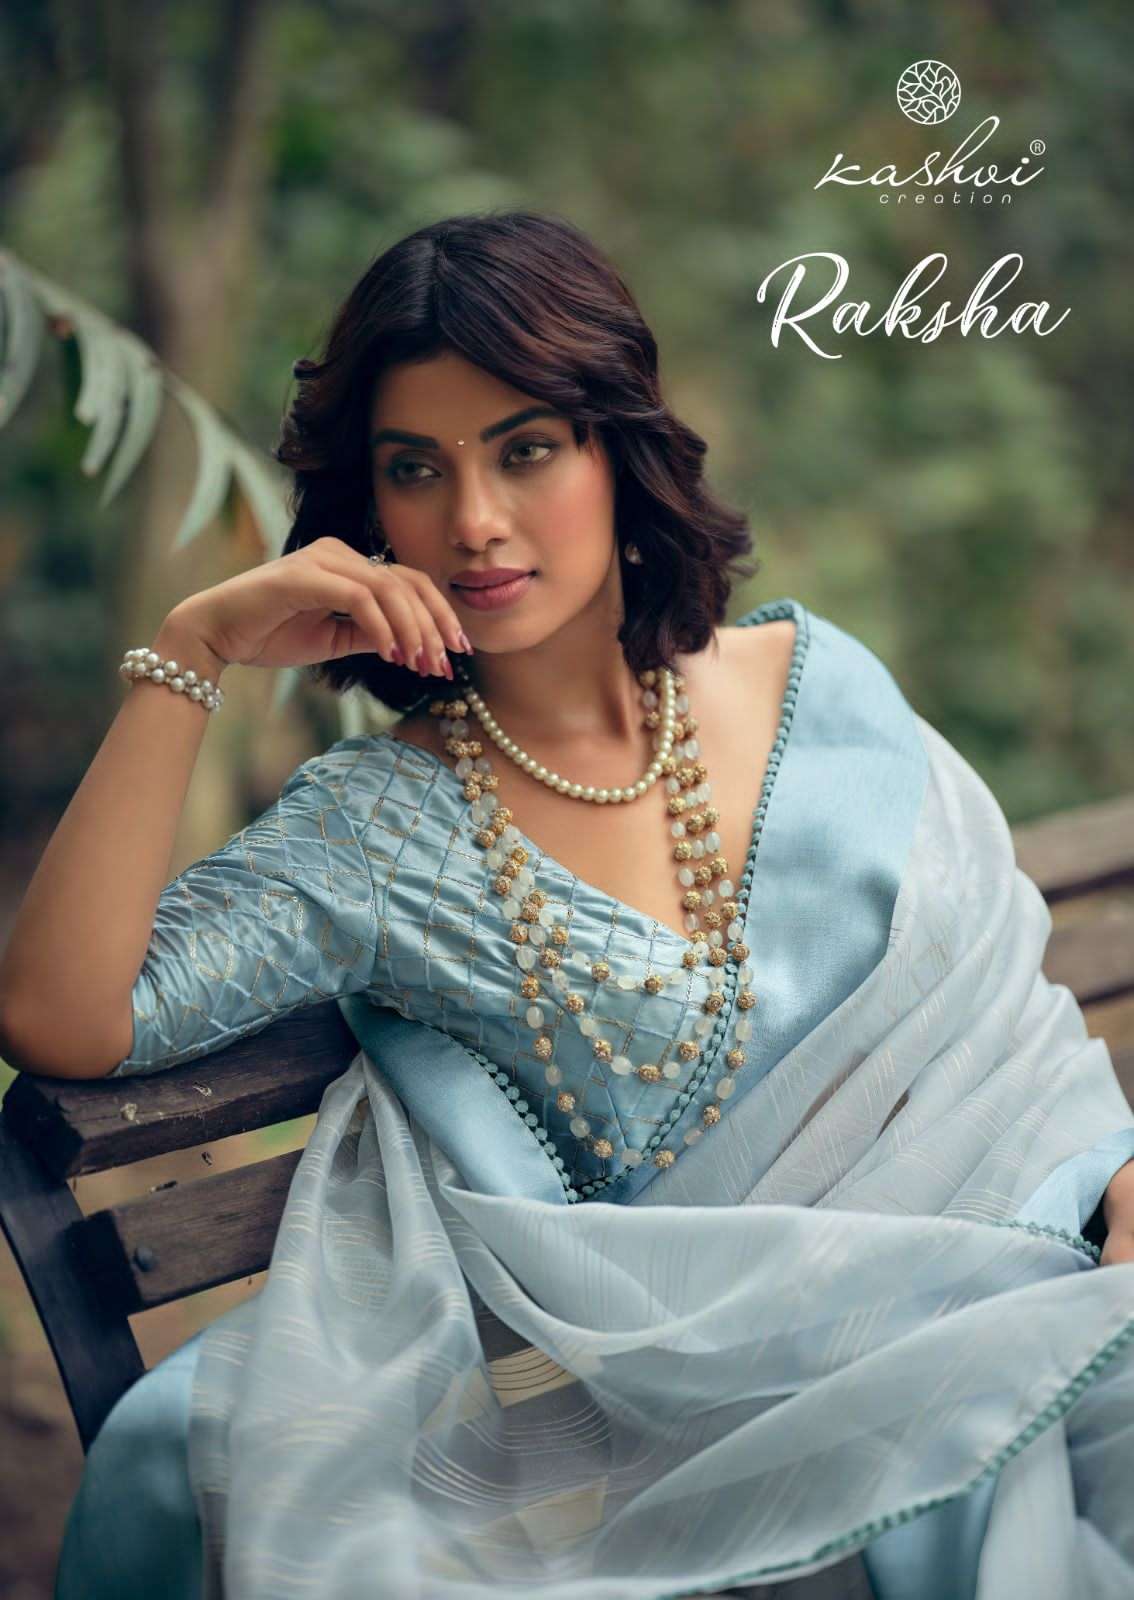 kashvi creation raksha 1001-1008 series exclusive designer saree catalogue latest collection 2023 